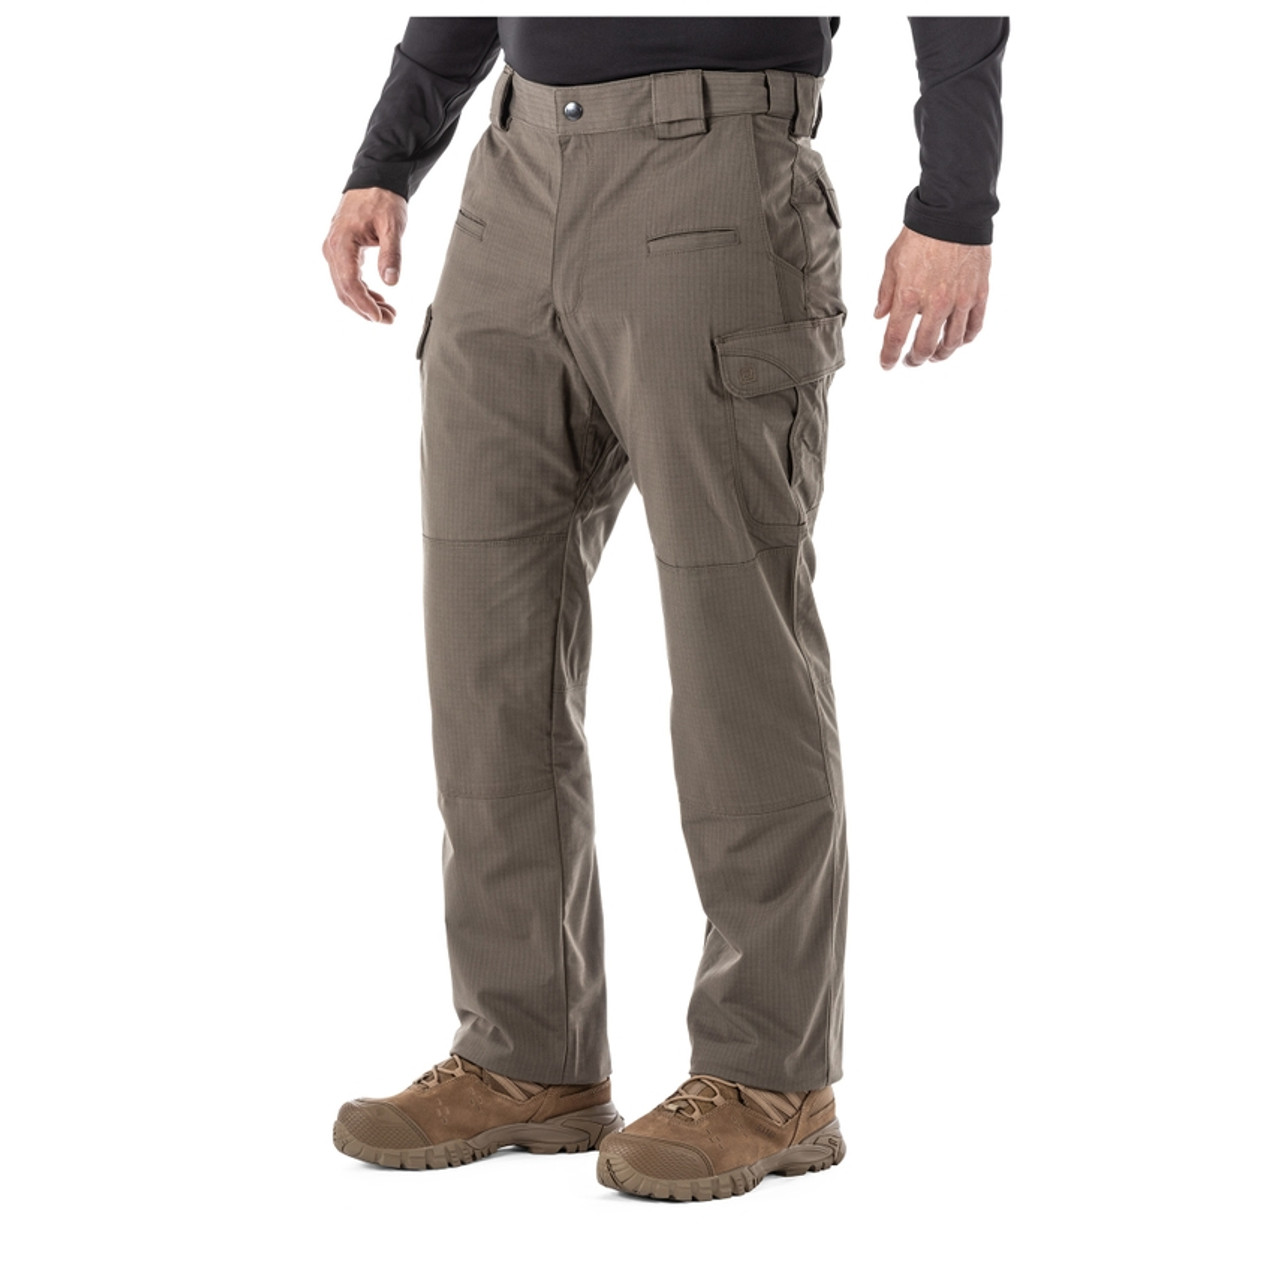 TACLITE TDU Pants: Rugged Performance & Quality | 5.11 Tactical®